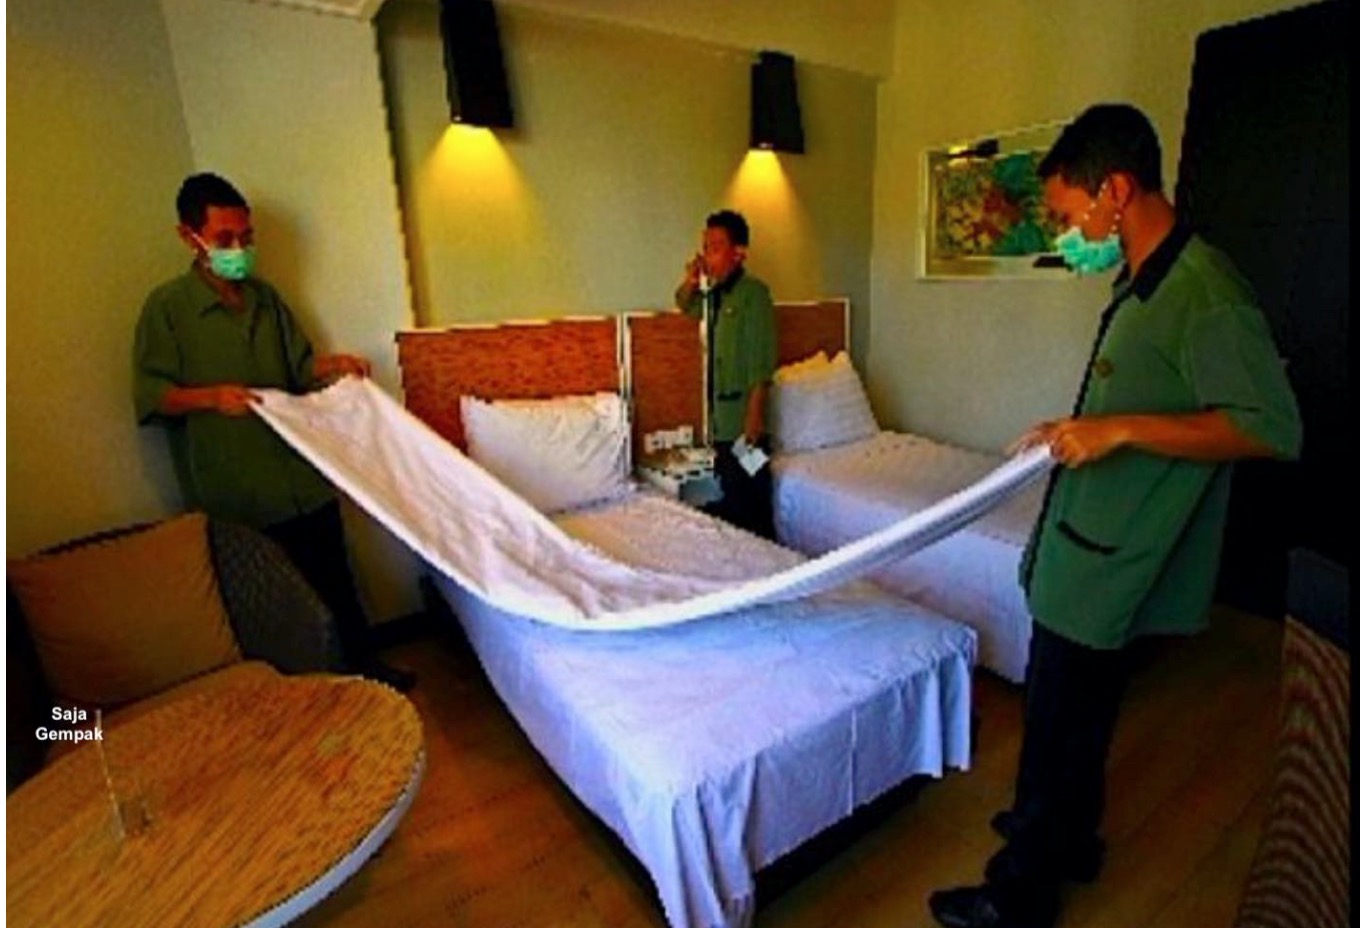 Bekas Pekerja Hotel Mendedahkan Beberapa Tabiat Jijik Segelintir Pekerja Hotel - nangtime.com